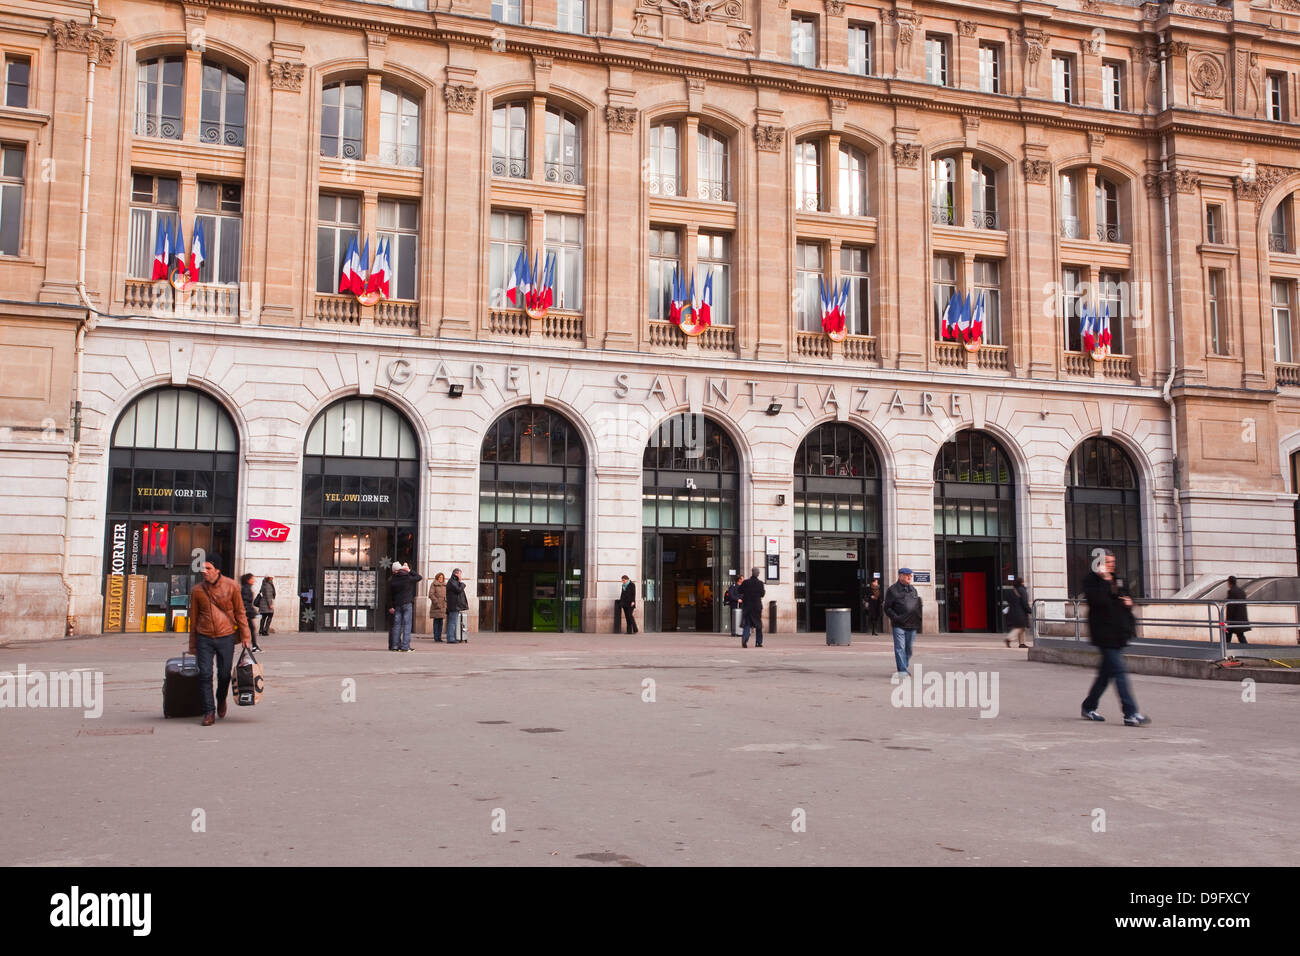 Gare Saint Lazare railway station in Paris, France Stock Photo